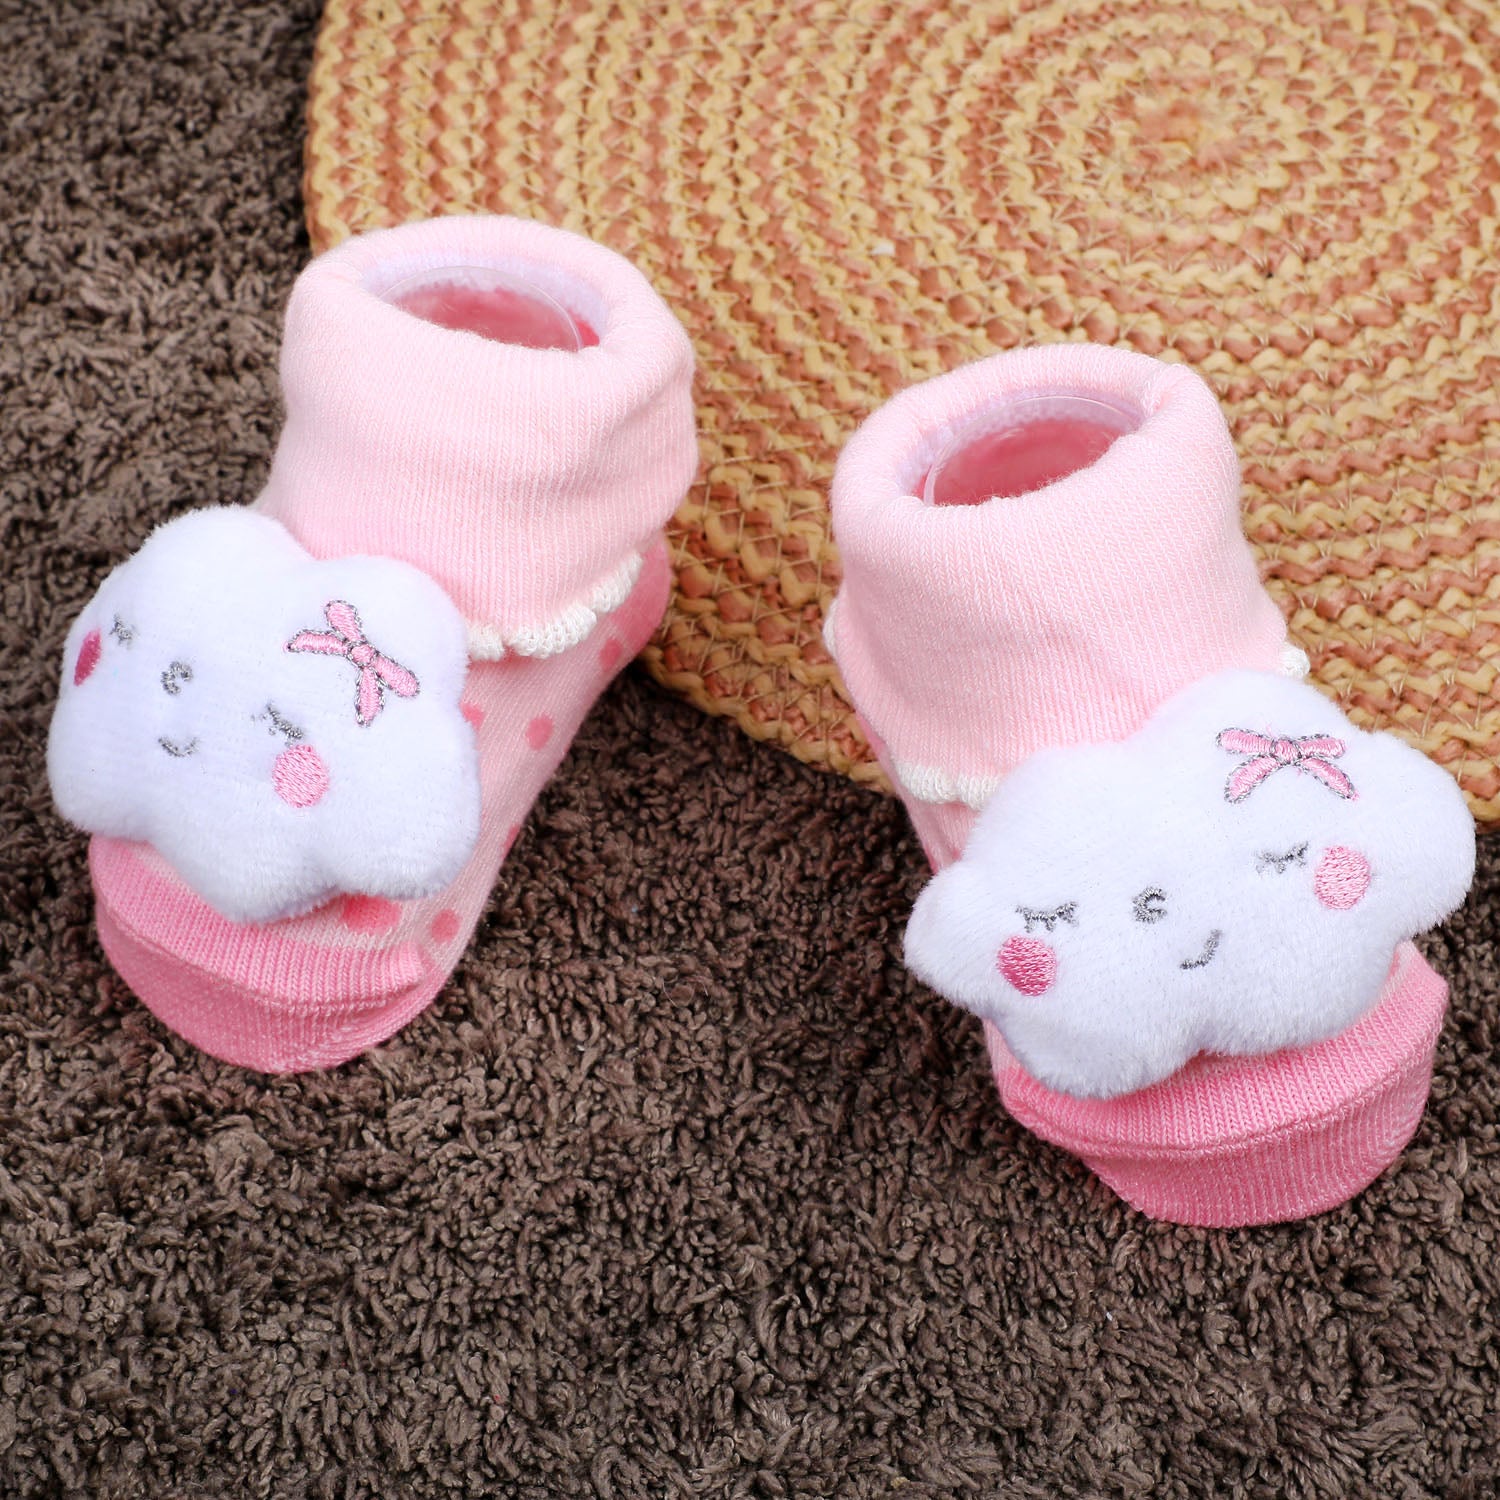 Baby Moo Sleeping Cloud Cotton Anti-Skid 3D Socks - Pink - Baby Moo